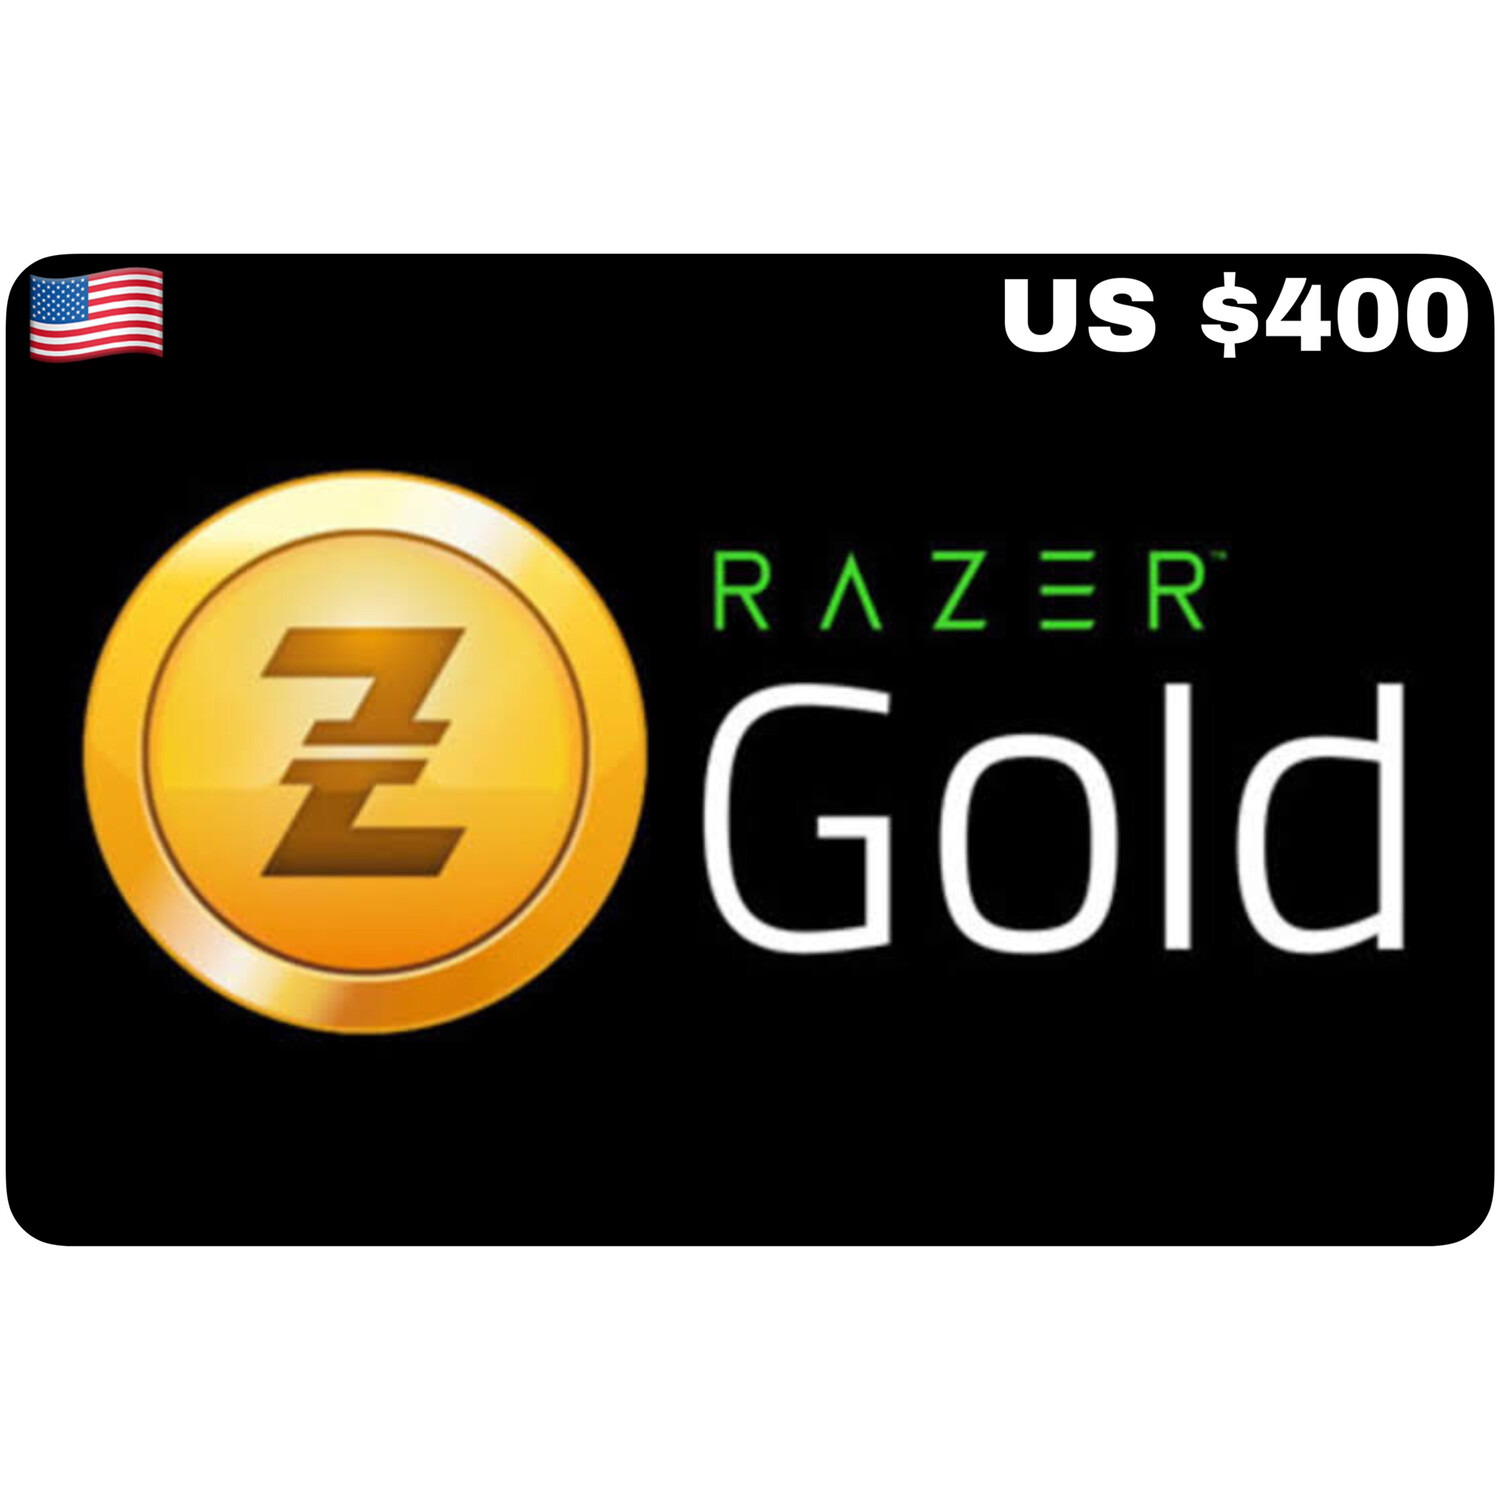 Razer Gold Pin US $400